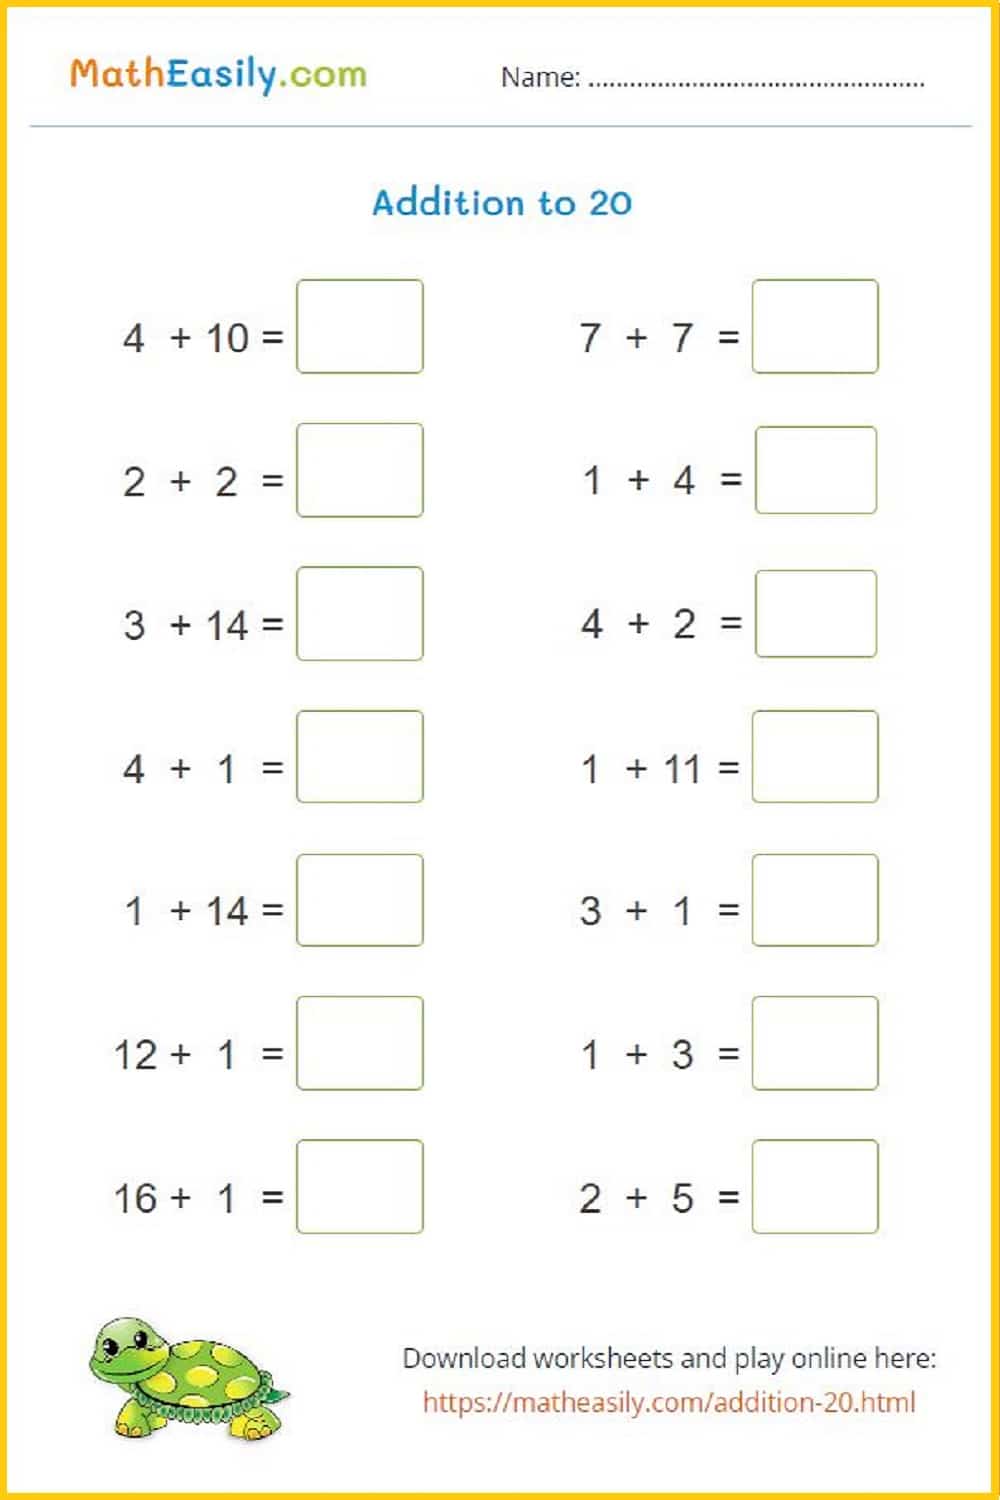 free printable kindergarten math worksheets pdf free download. 
math for kindergarten PDF. Free Math Worksheets Kindergarten ADDITION. Free worksheets kindergarten.